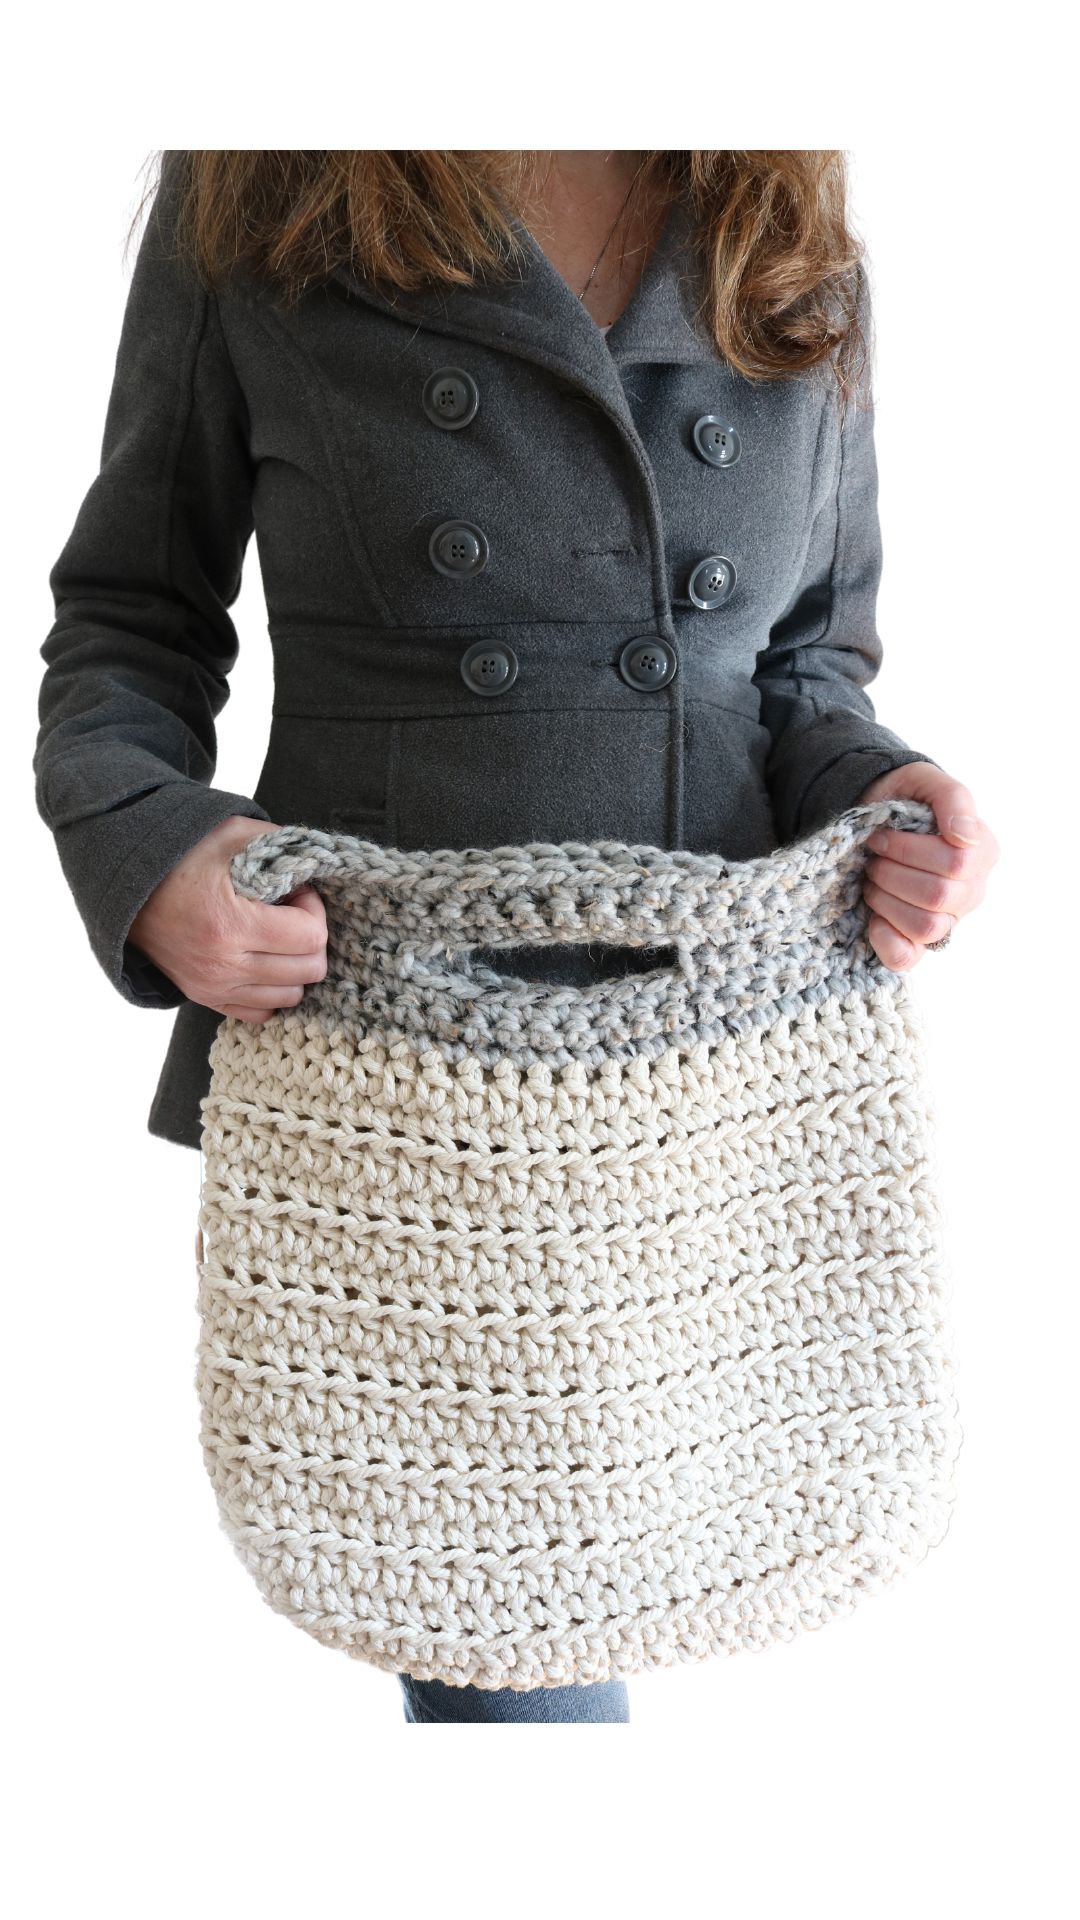 Easy FREE Modern Hobo Crochet Tote Bag Pattern - Life + Yarn